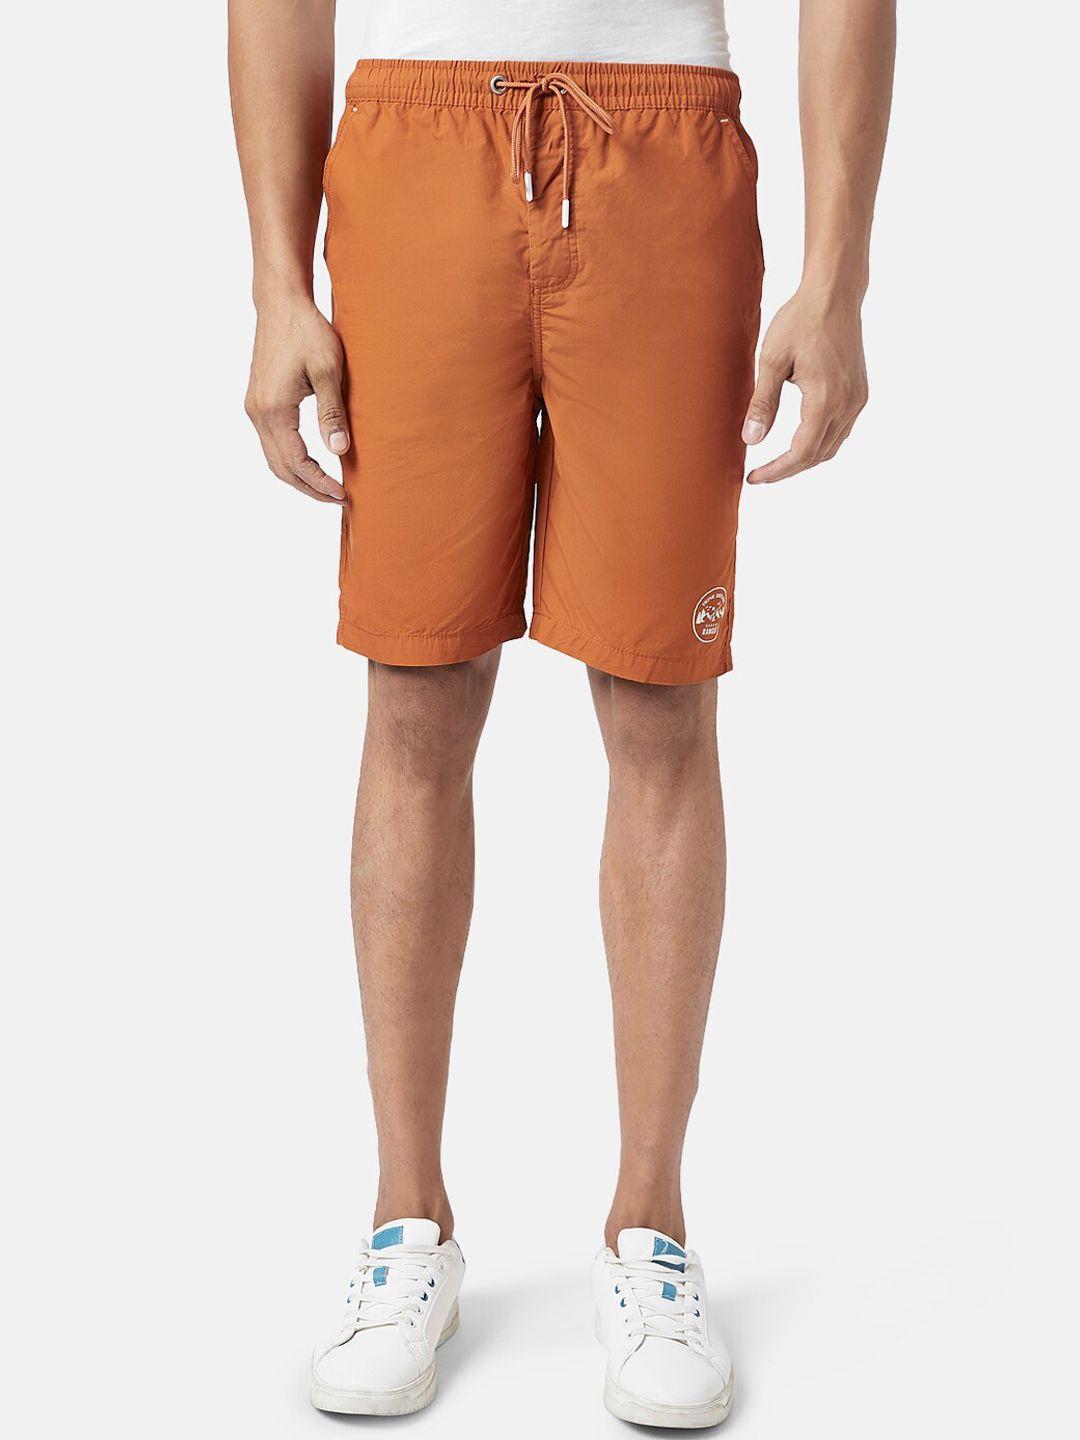 urban ranger by pantaloons men cotton mid-rise slim fit shorts